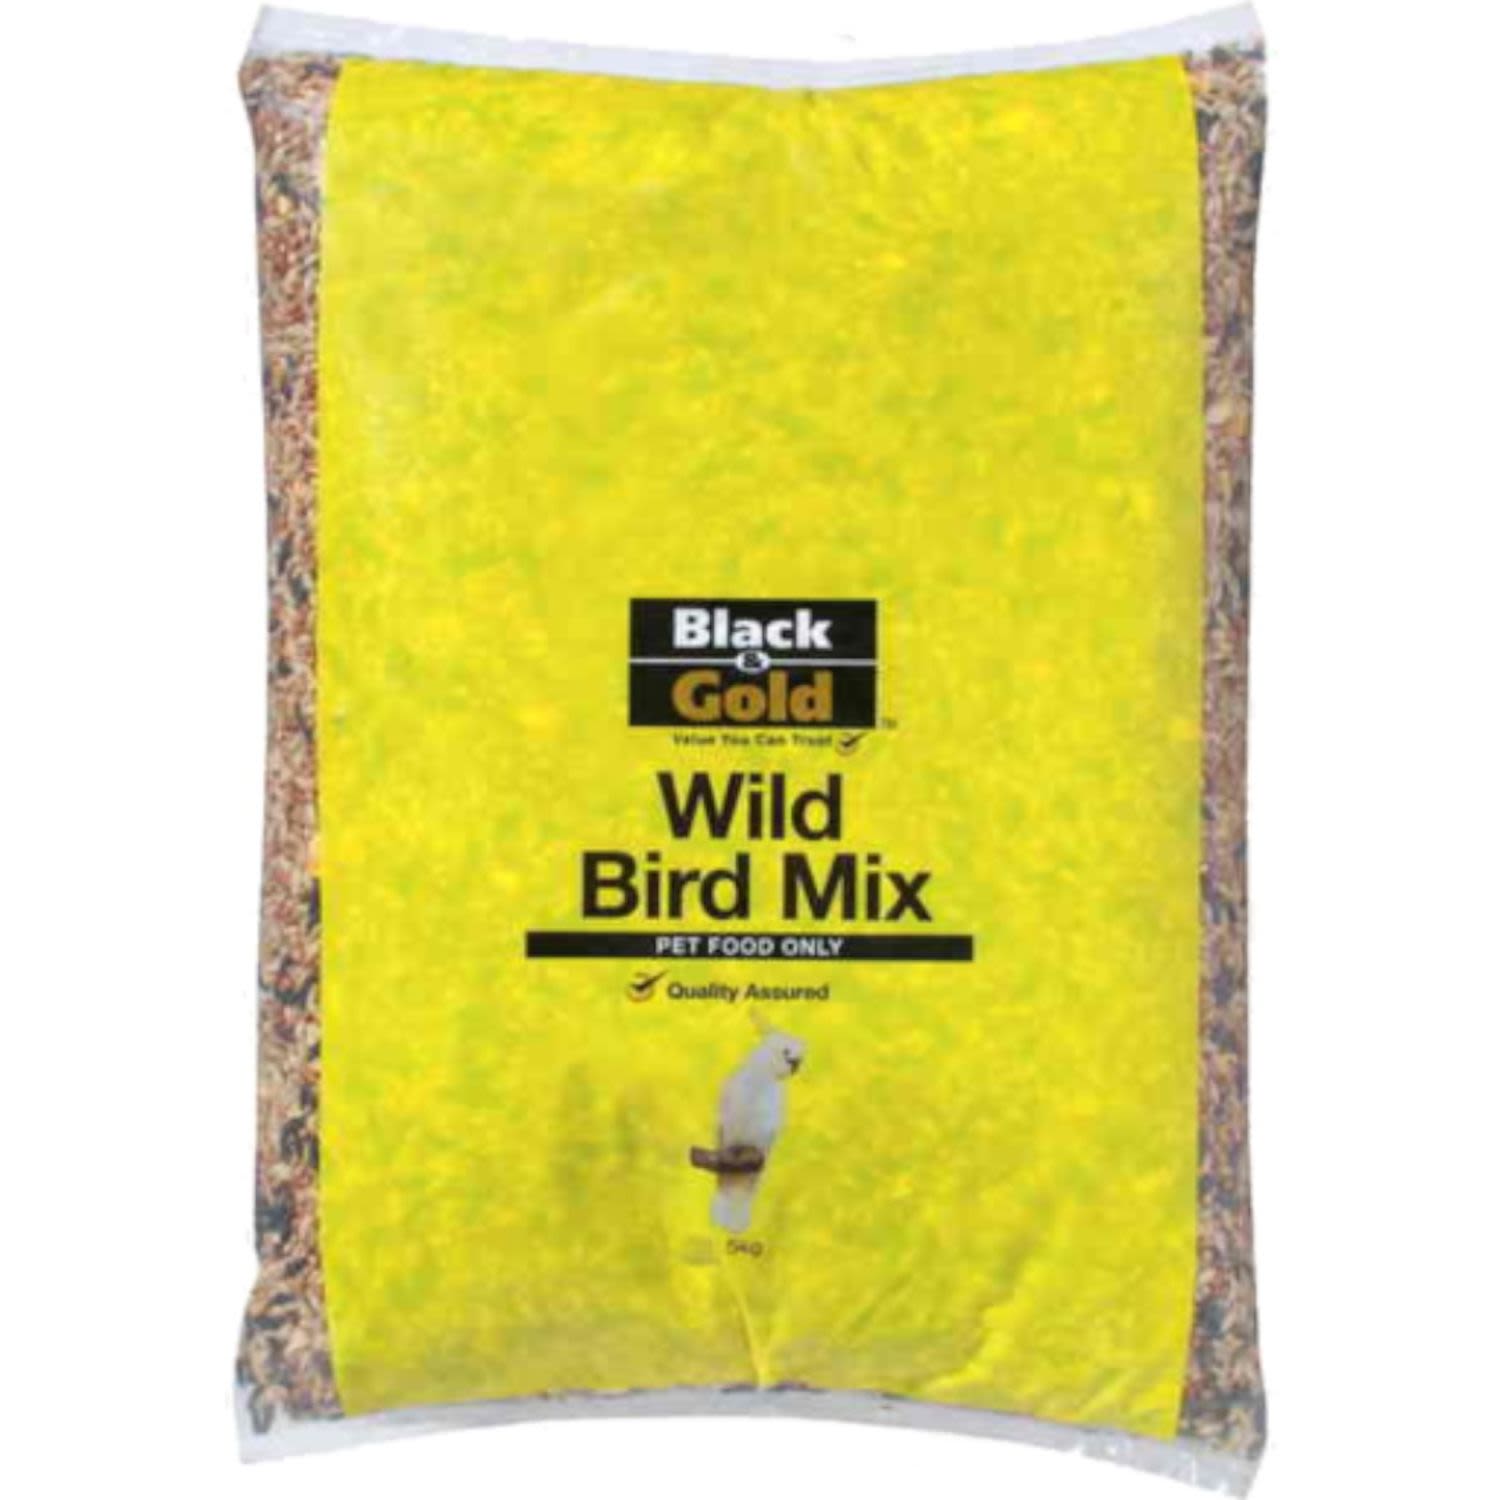 Black & Gold Wild Bird Mix, 5 Kilogram